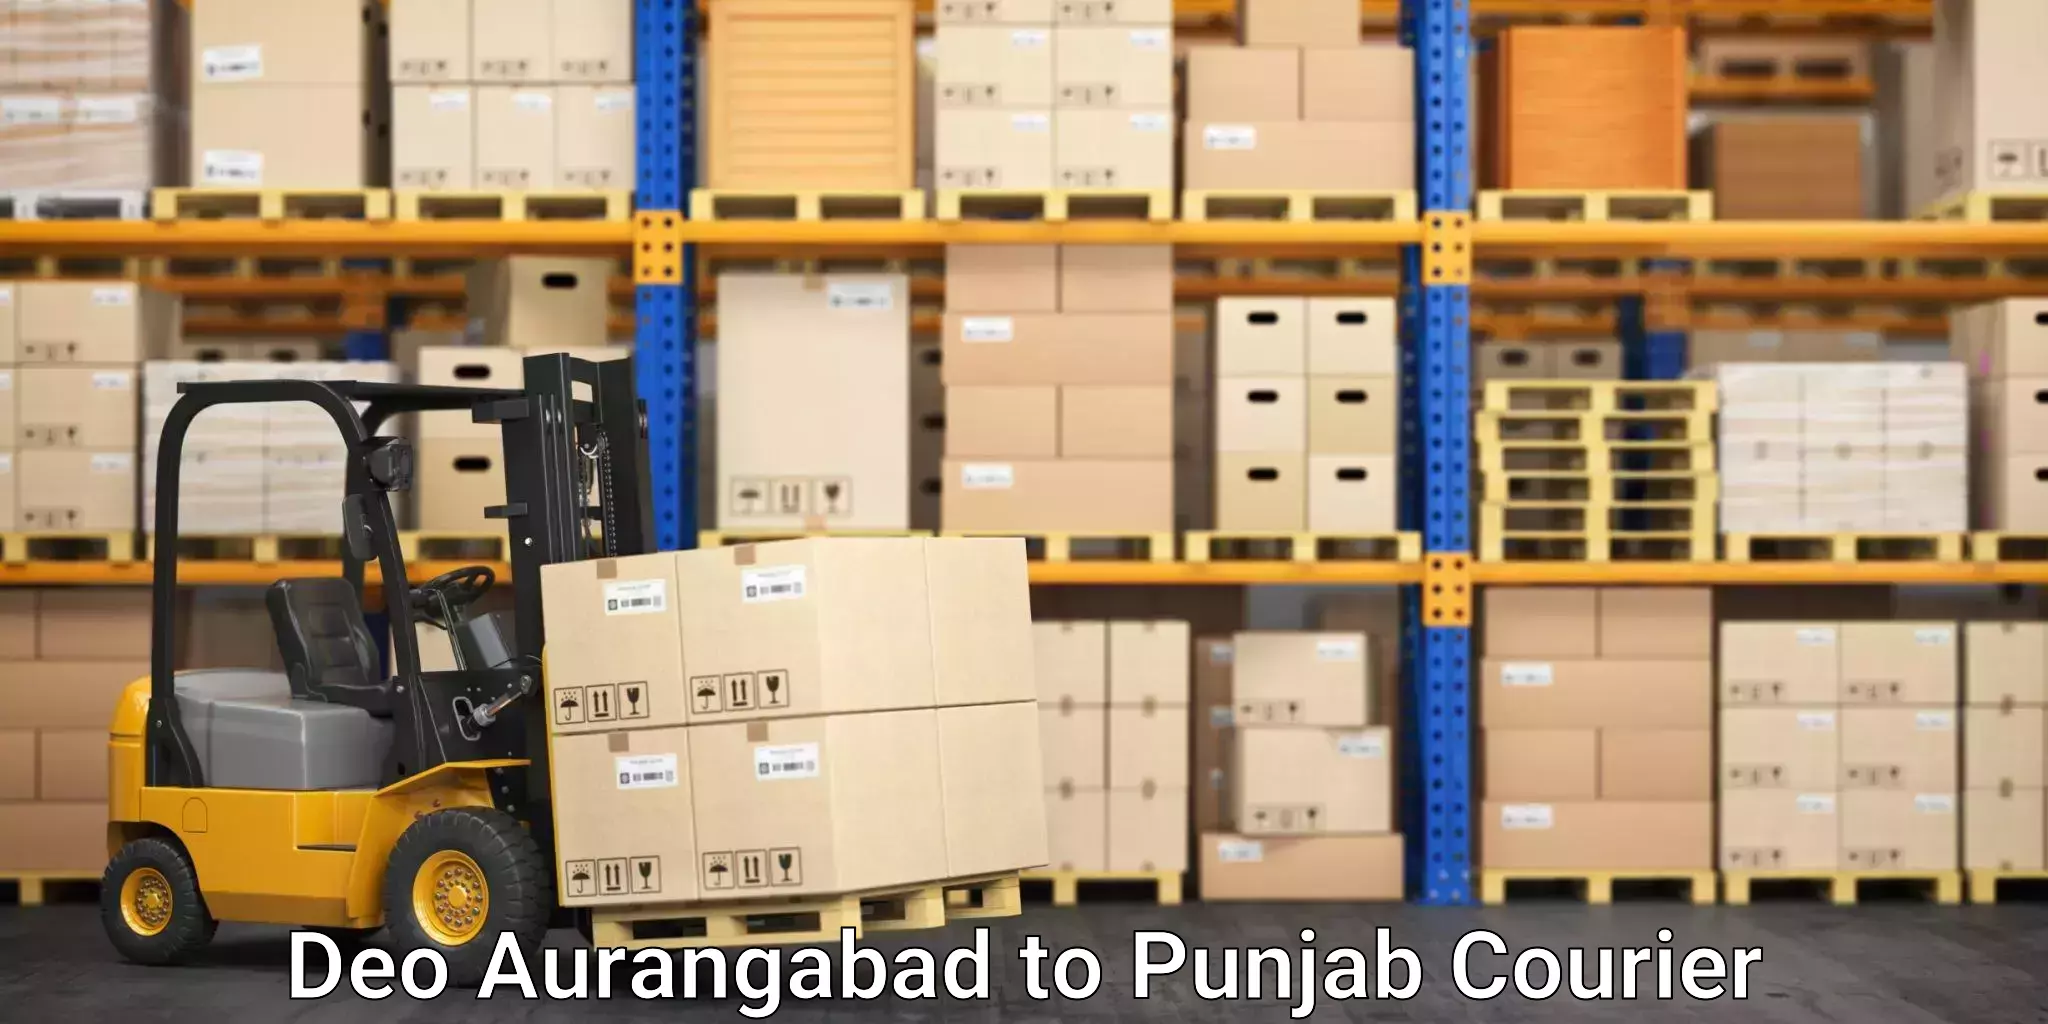 Furniture moving specialists Deo Aurangabad to Malerkotla